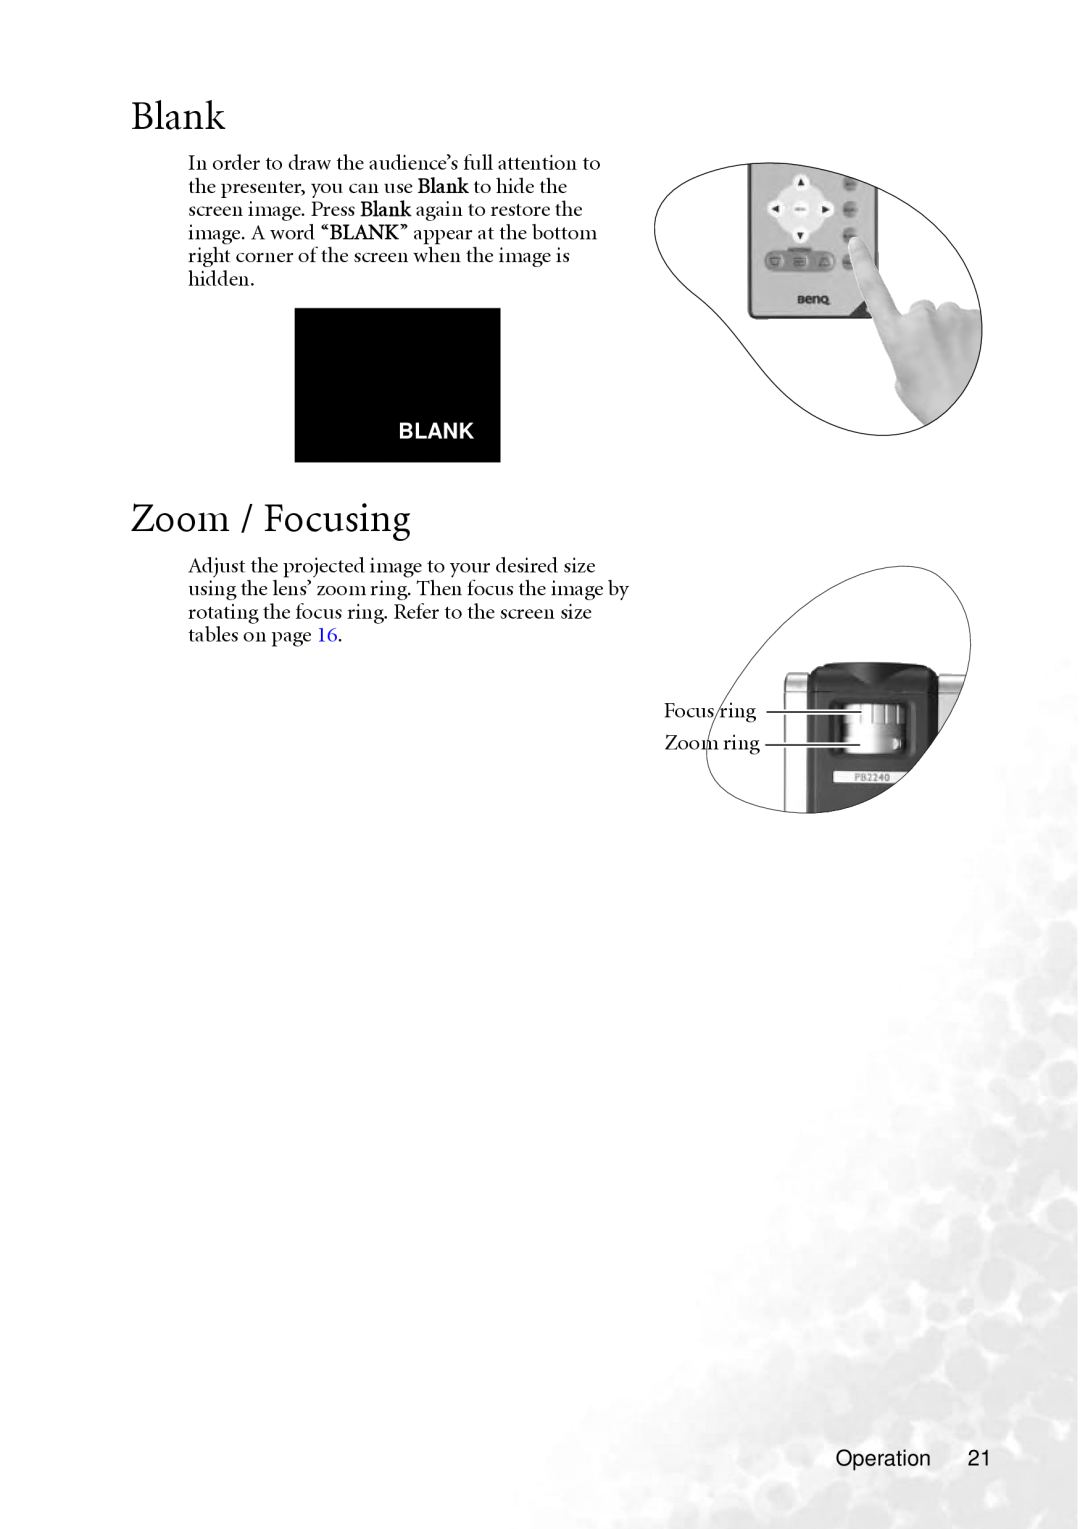 BenQ PB2240 user manual Blank, Zoom / Focusing 